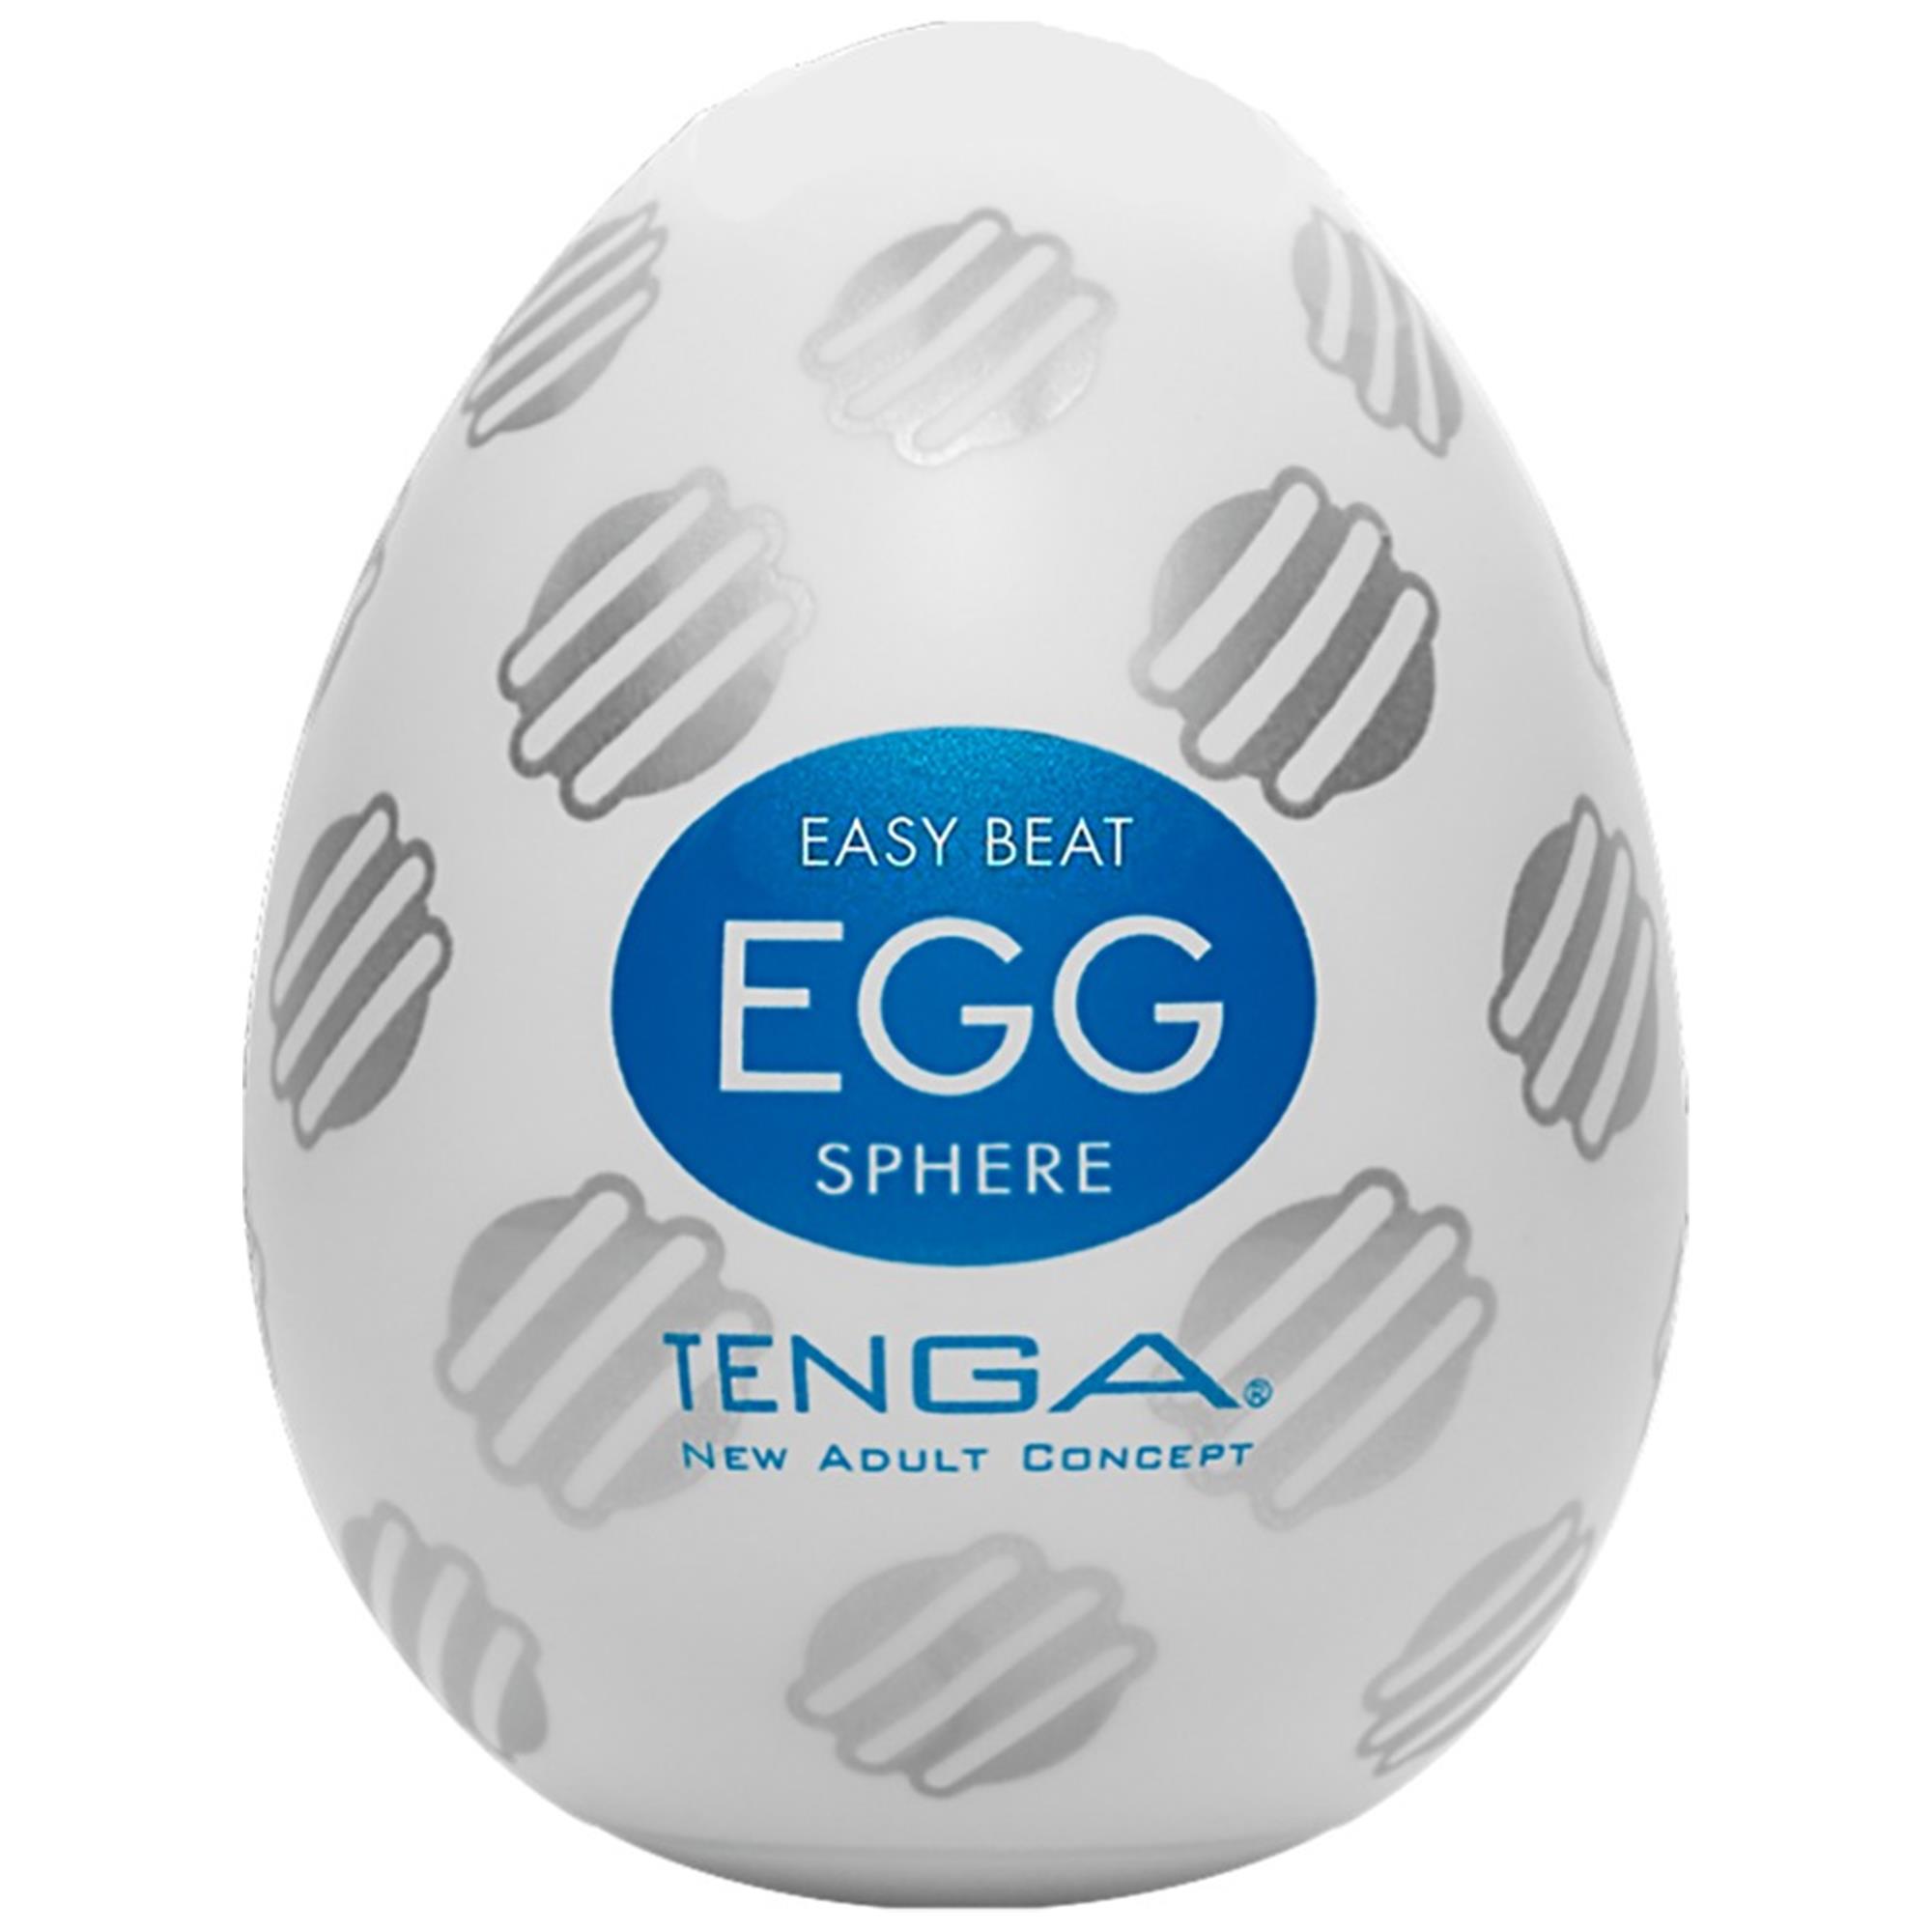 Tenga Egg Sphere | Lösvagina | Intimast